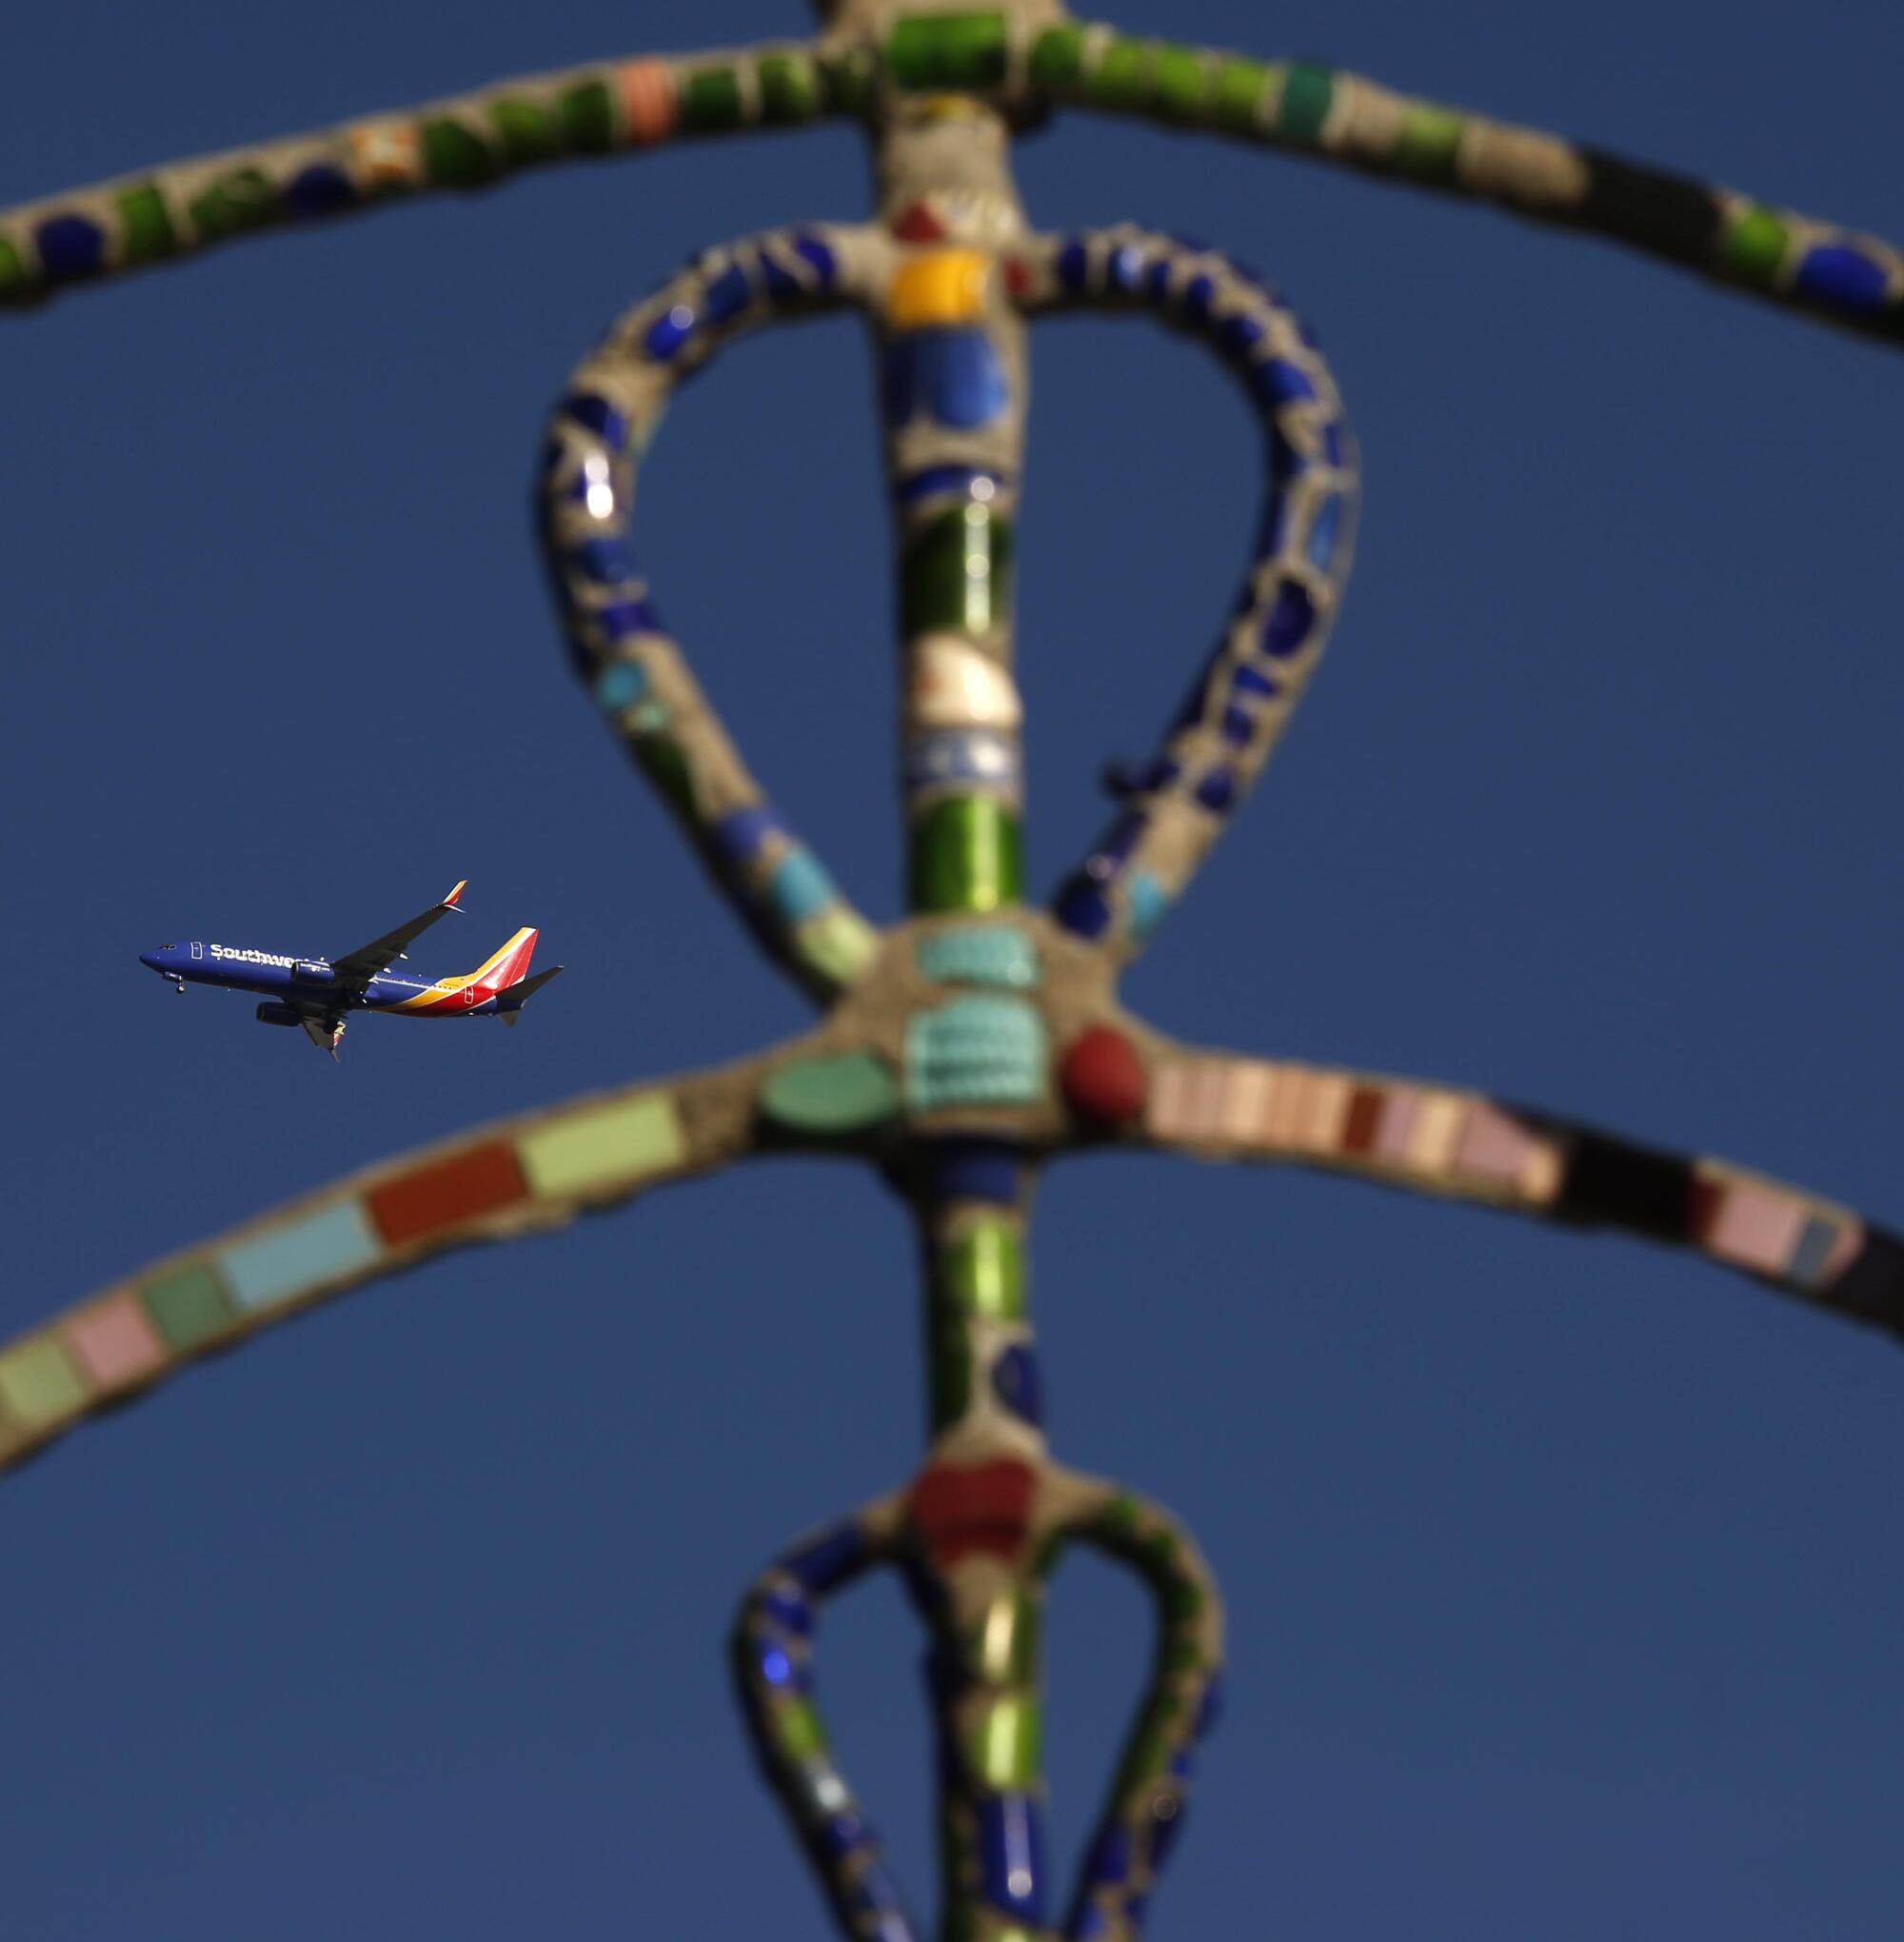 A plane in the air seen through a piece colorful metal artwork.